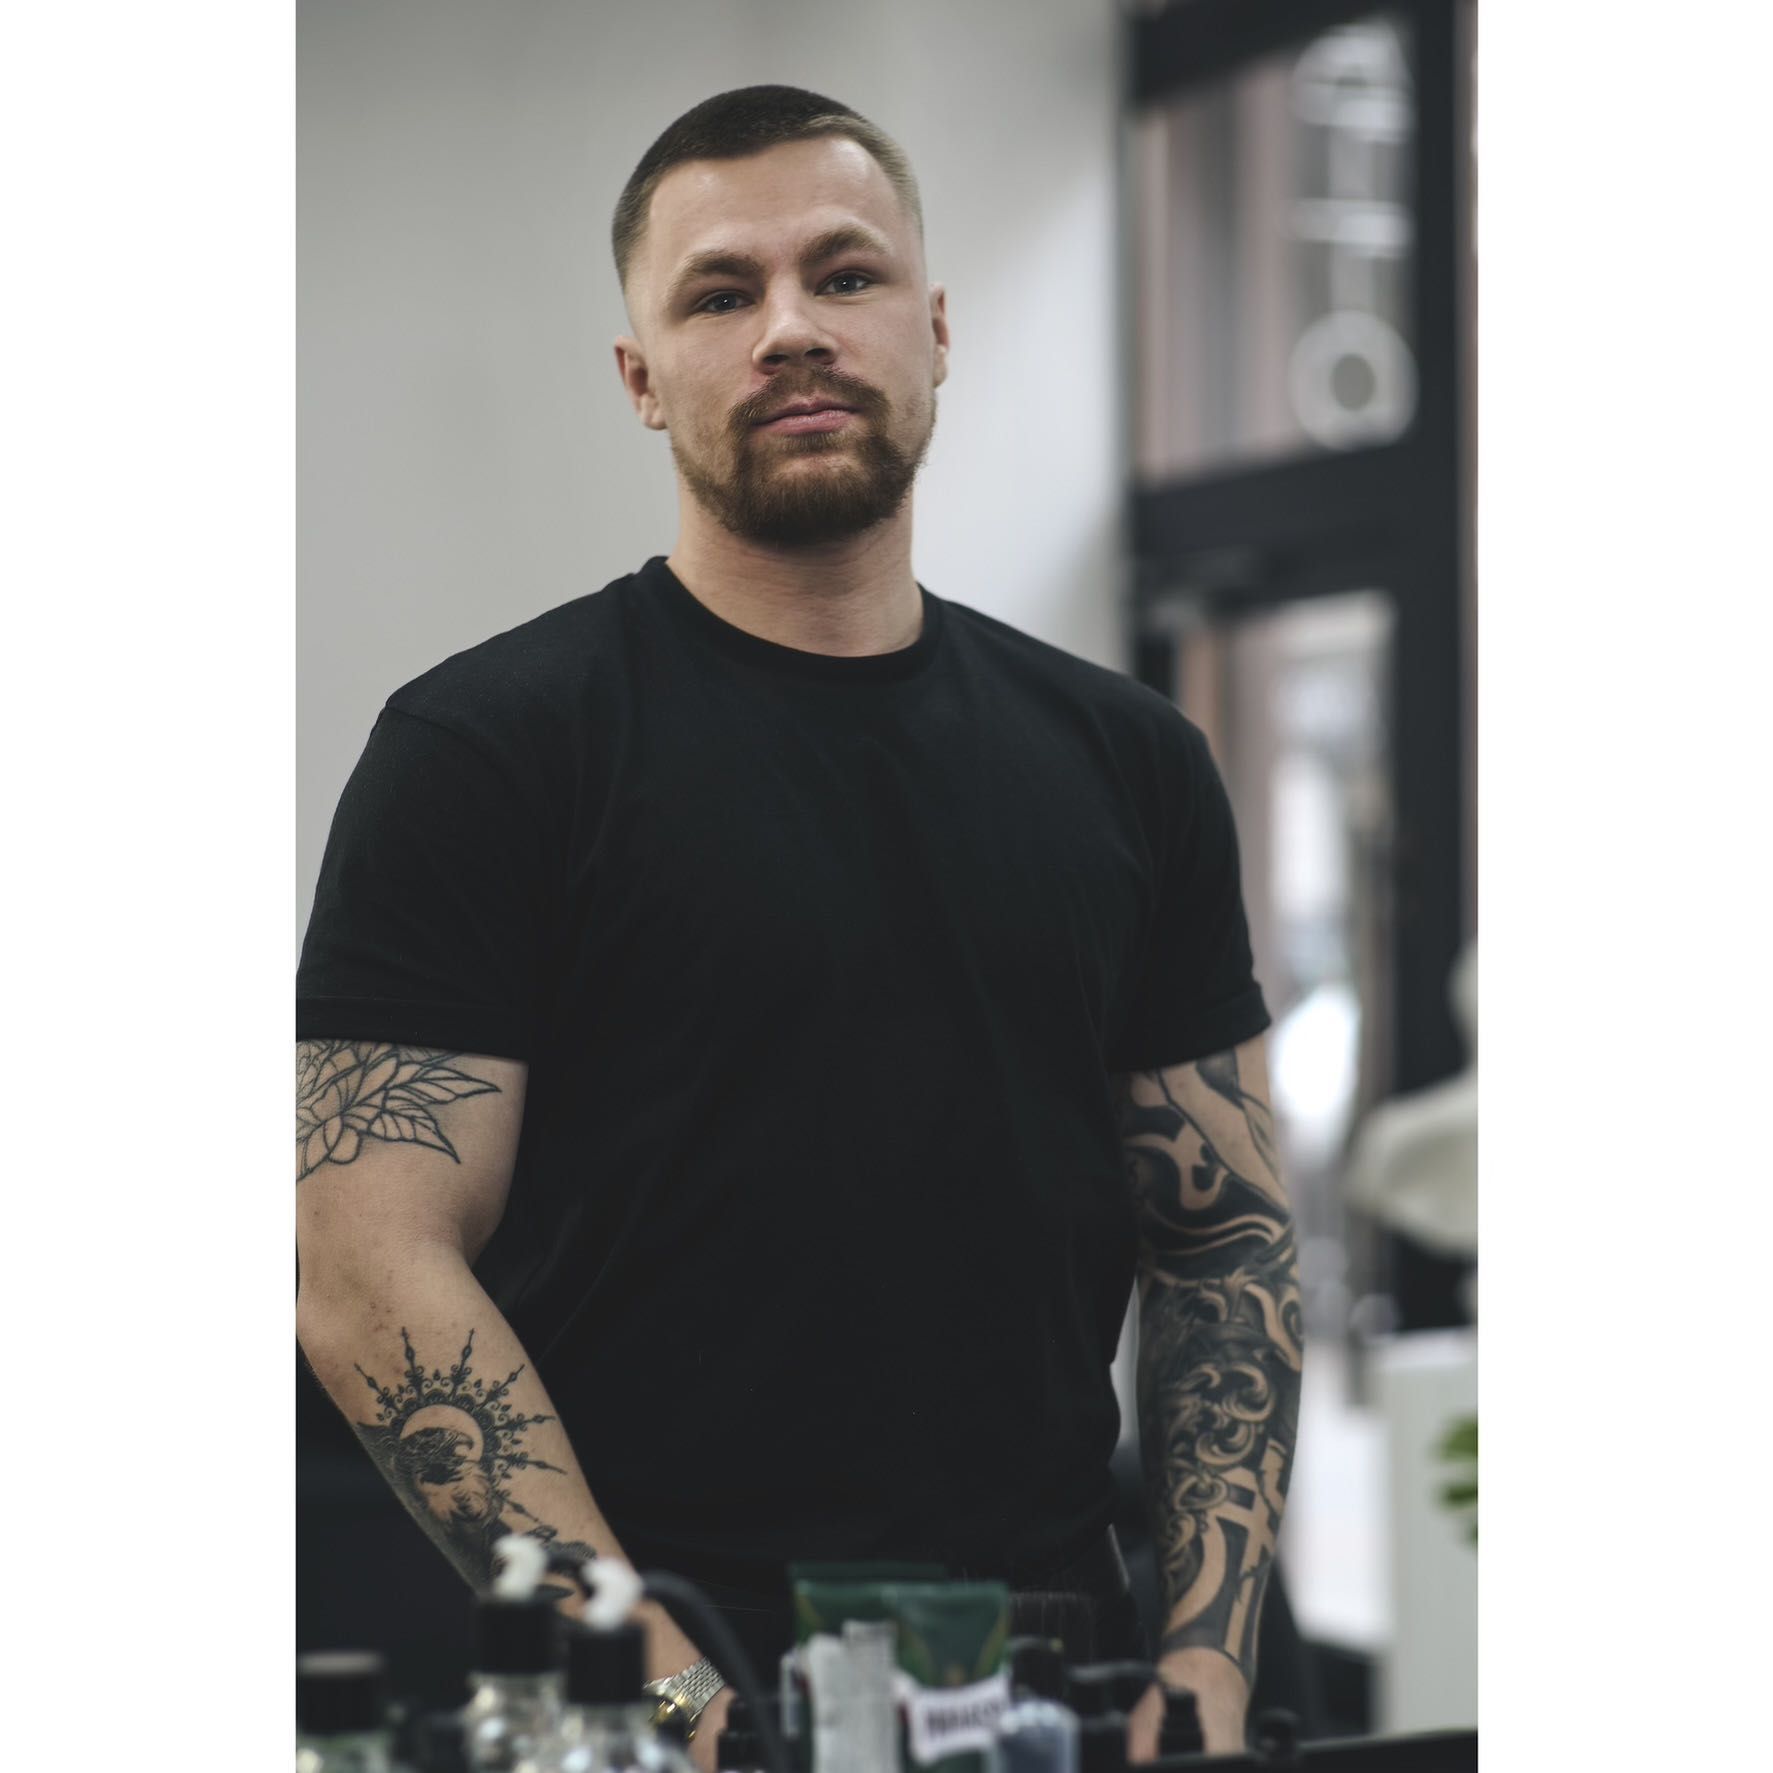 Aleksander - OFF CUT Barbershop